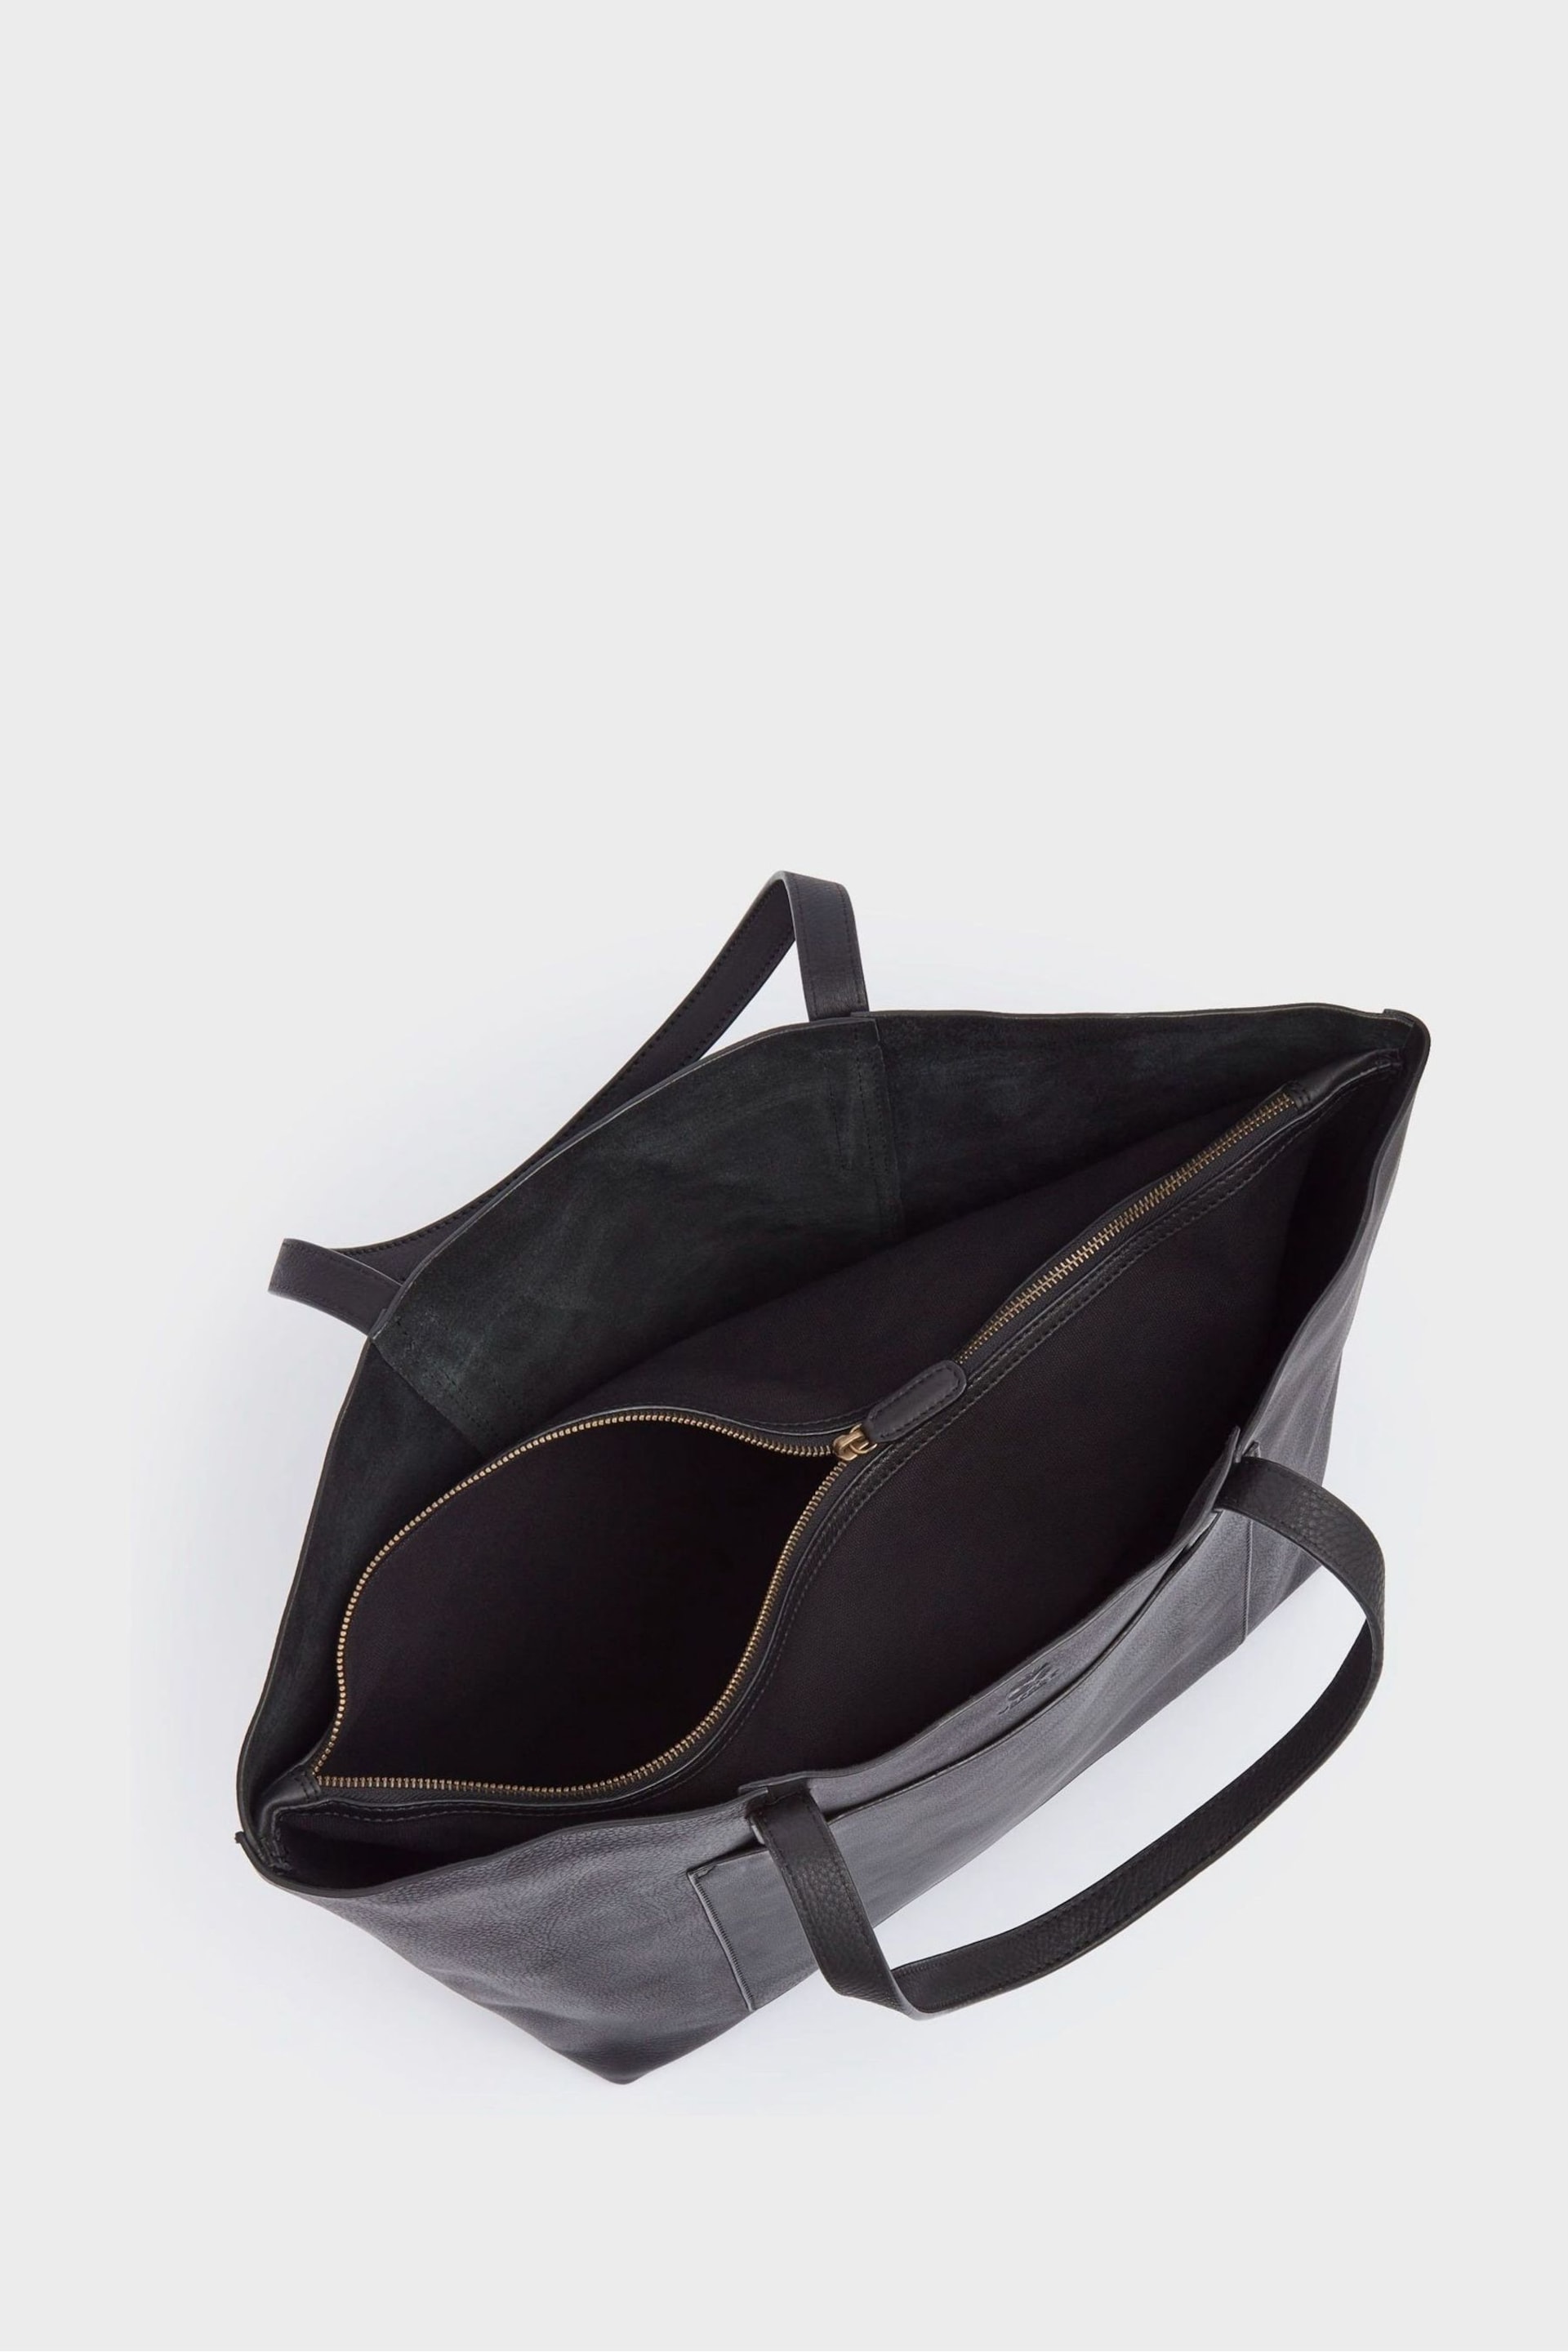 OSPREY LONDON The Vintage Leather Santa Fe Tote Bag - Image 4 of 7